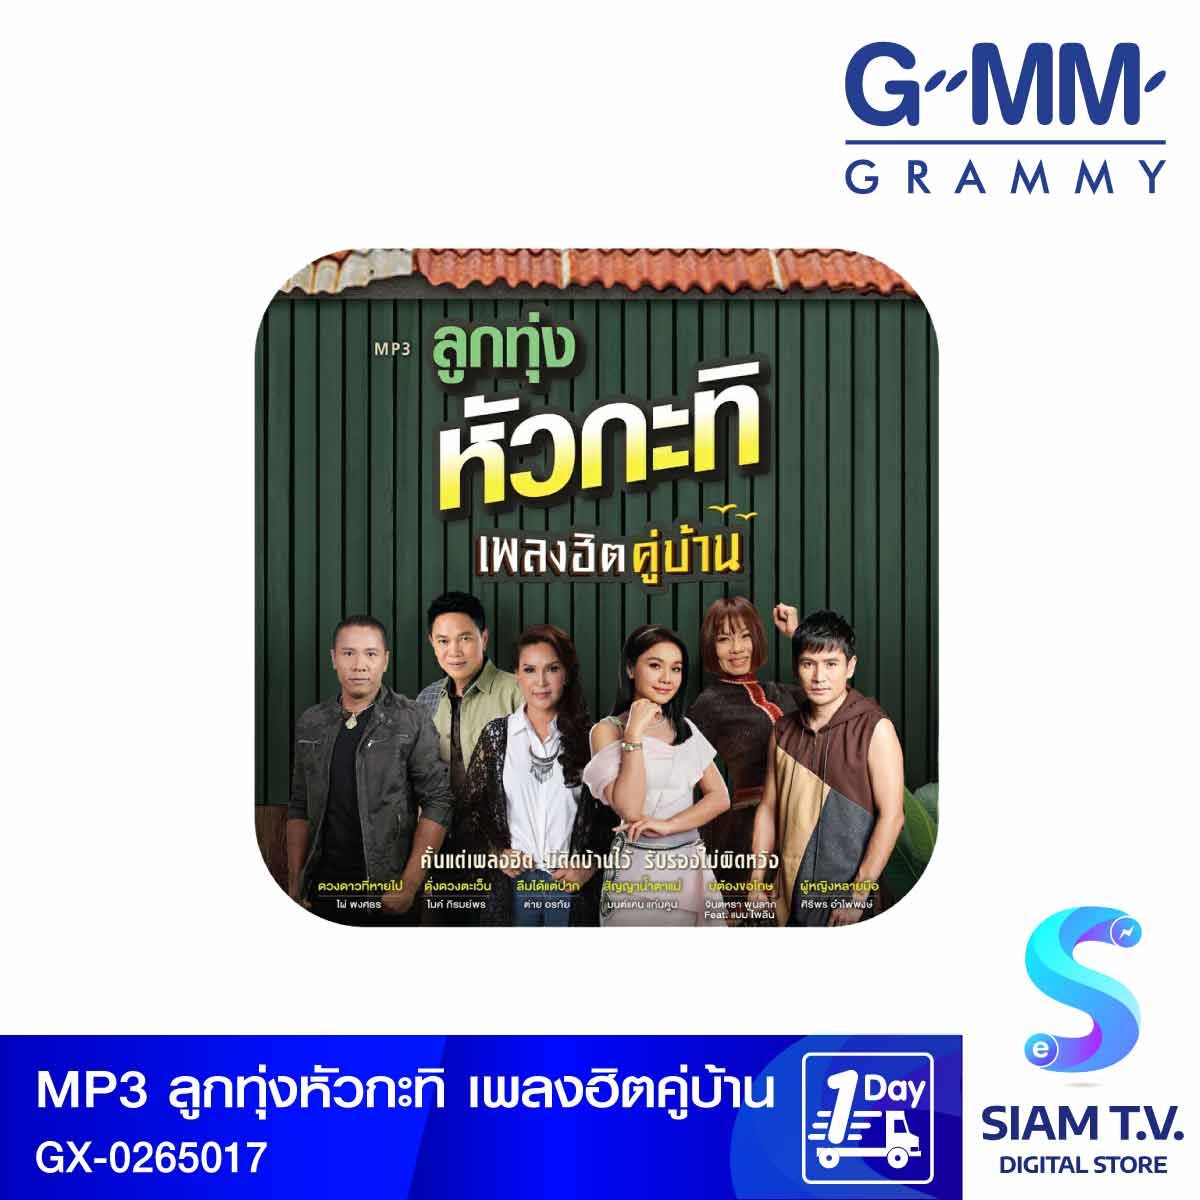 GMM GRAMMY MP3 ลูกทุ่งหัวกะทิ เพลงฮิตคู่บ้านBranded GX-0265017